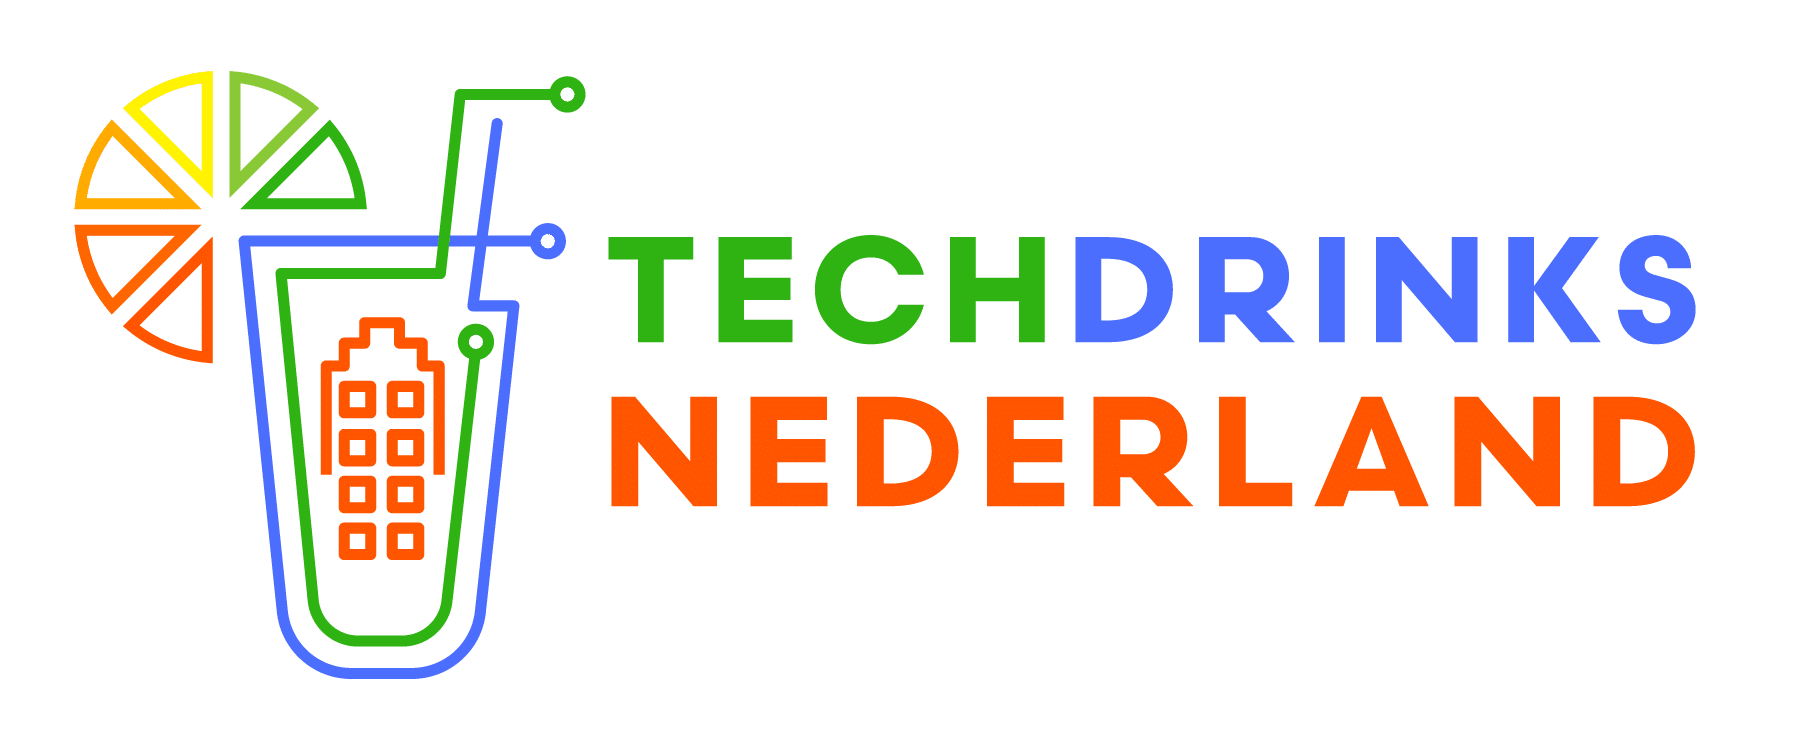 Techdrinks Eindhoven Techdrinks rotterdam Techdrinks Amsterdam Techdrinks Zwolle Techdrinks Enschede